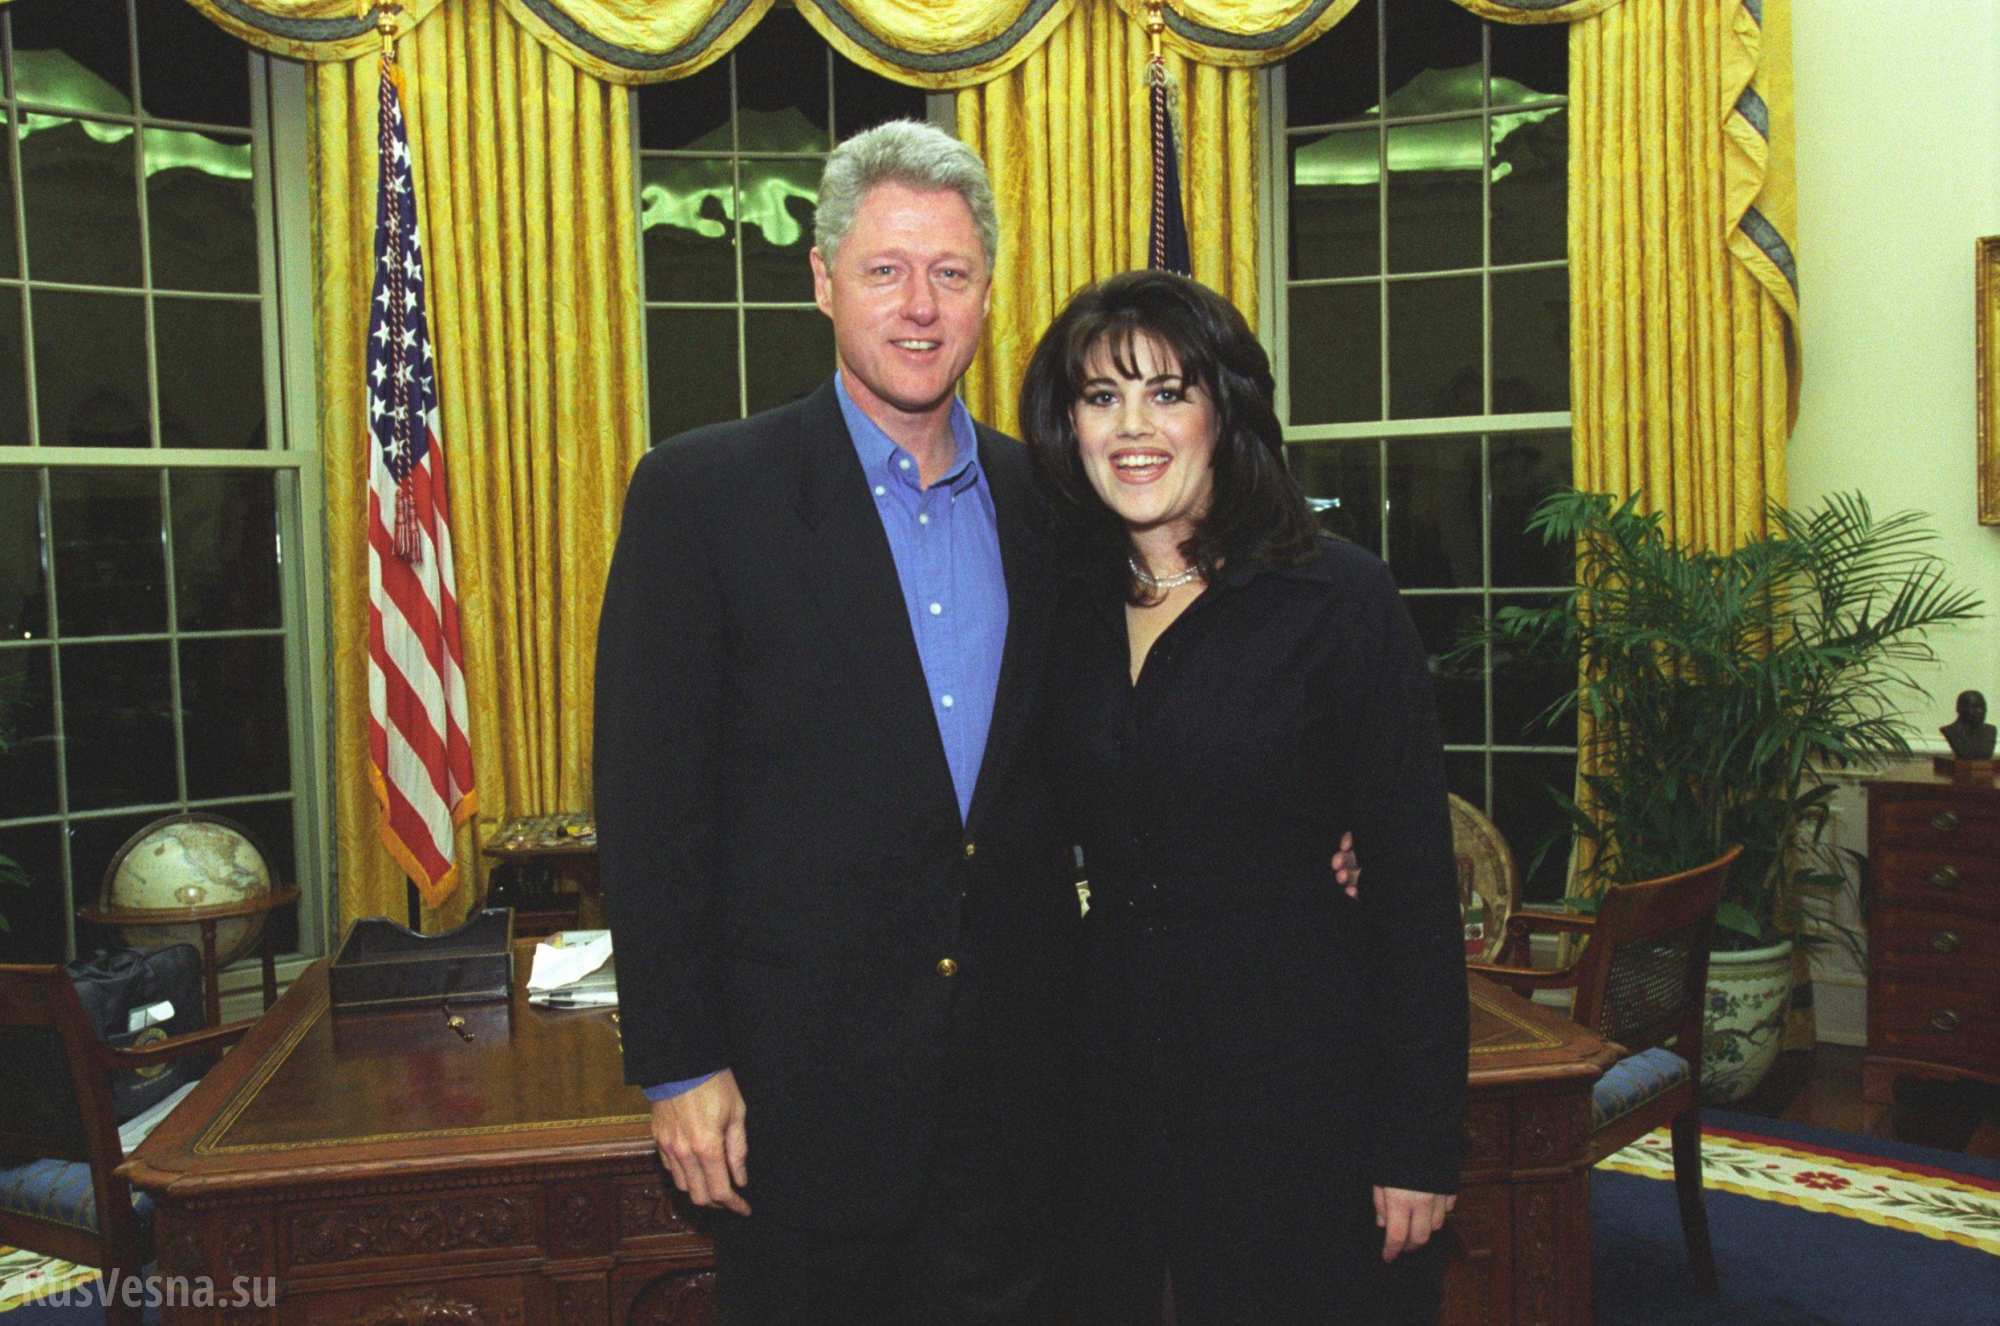 Билл Клинтон и его жена Хиллари Клинтон - фото, биография, личная жизнь